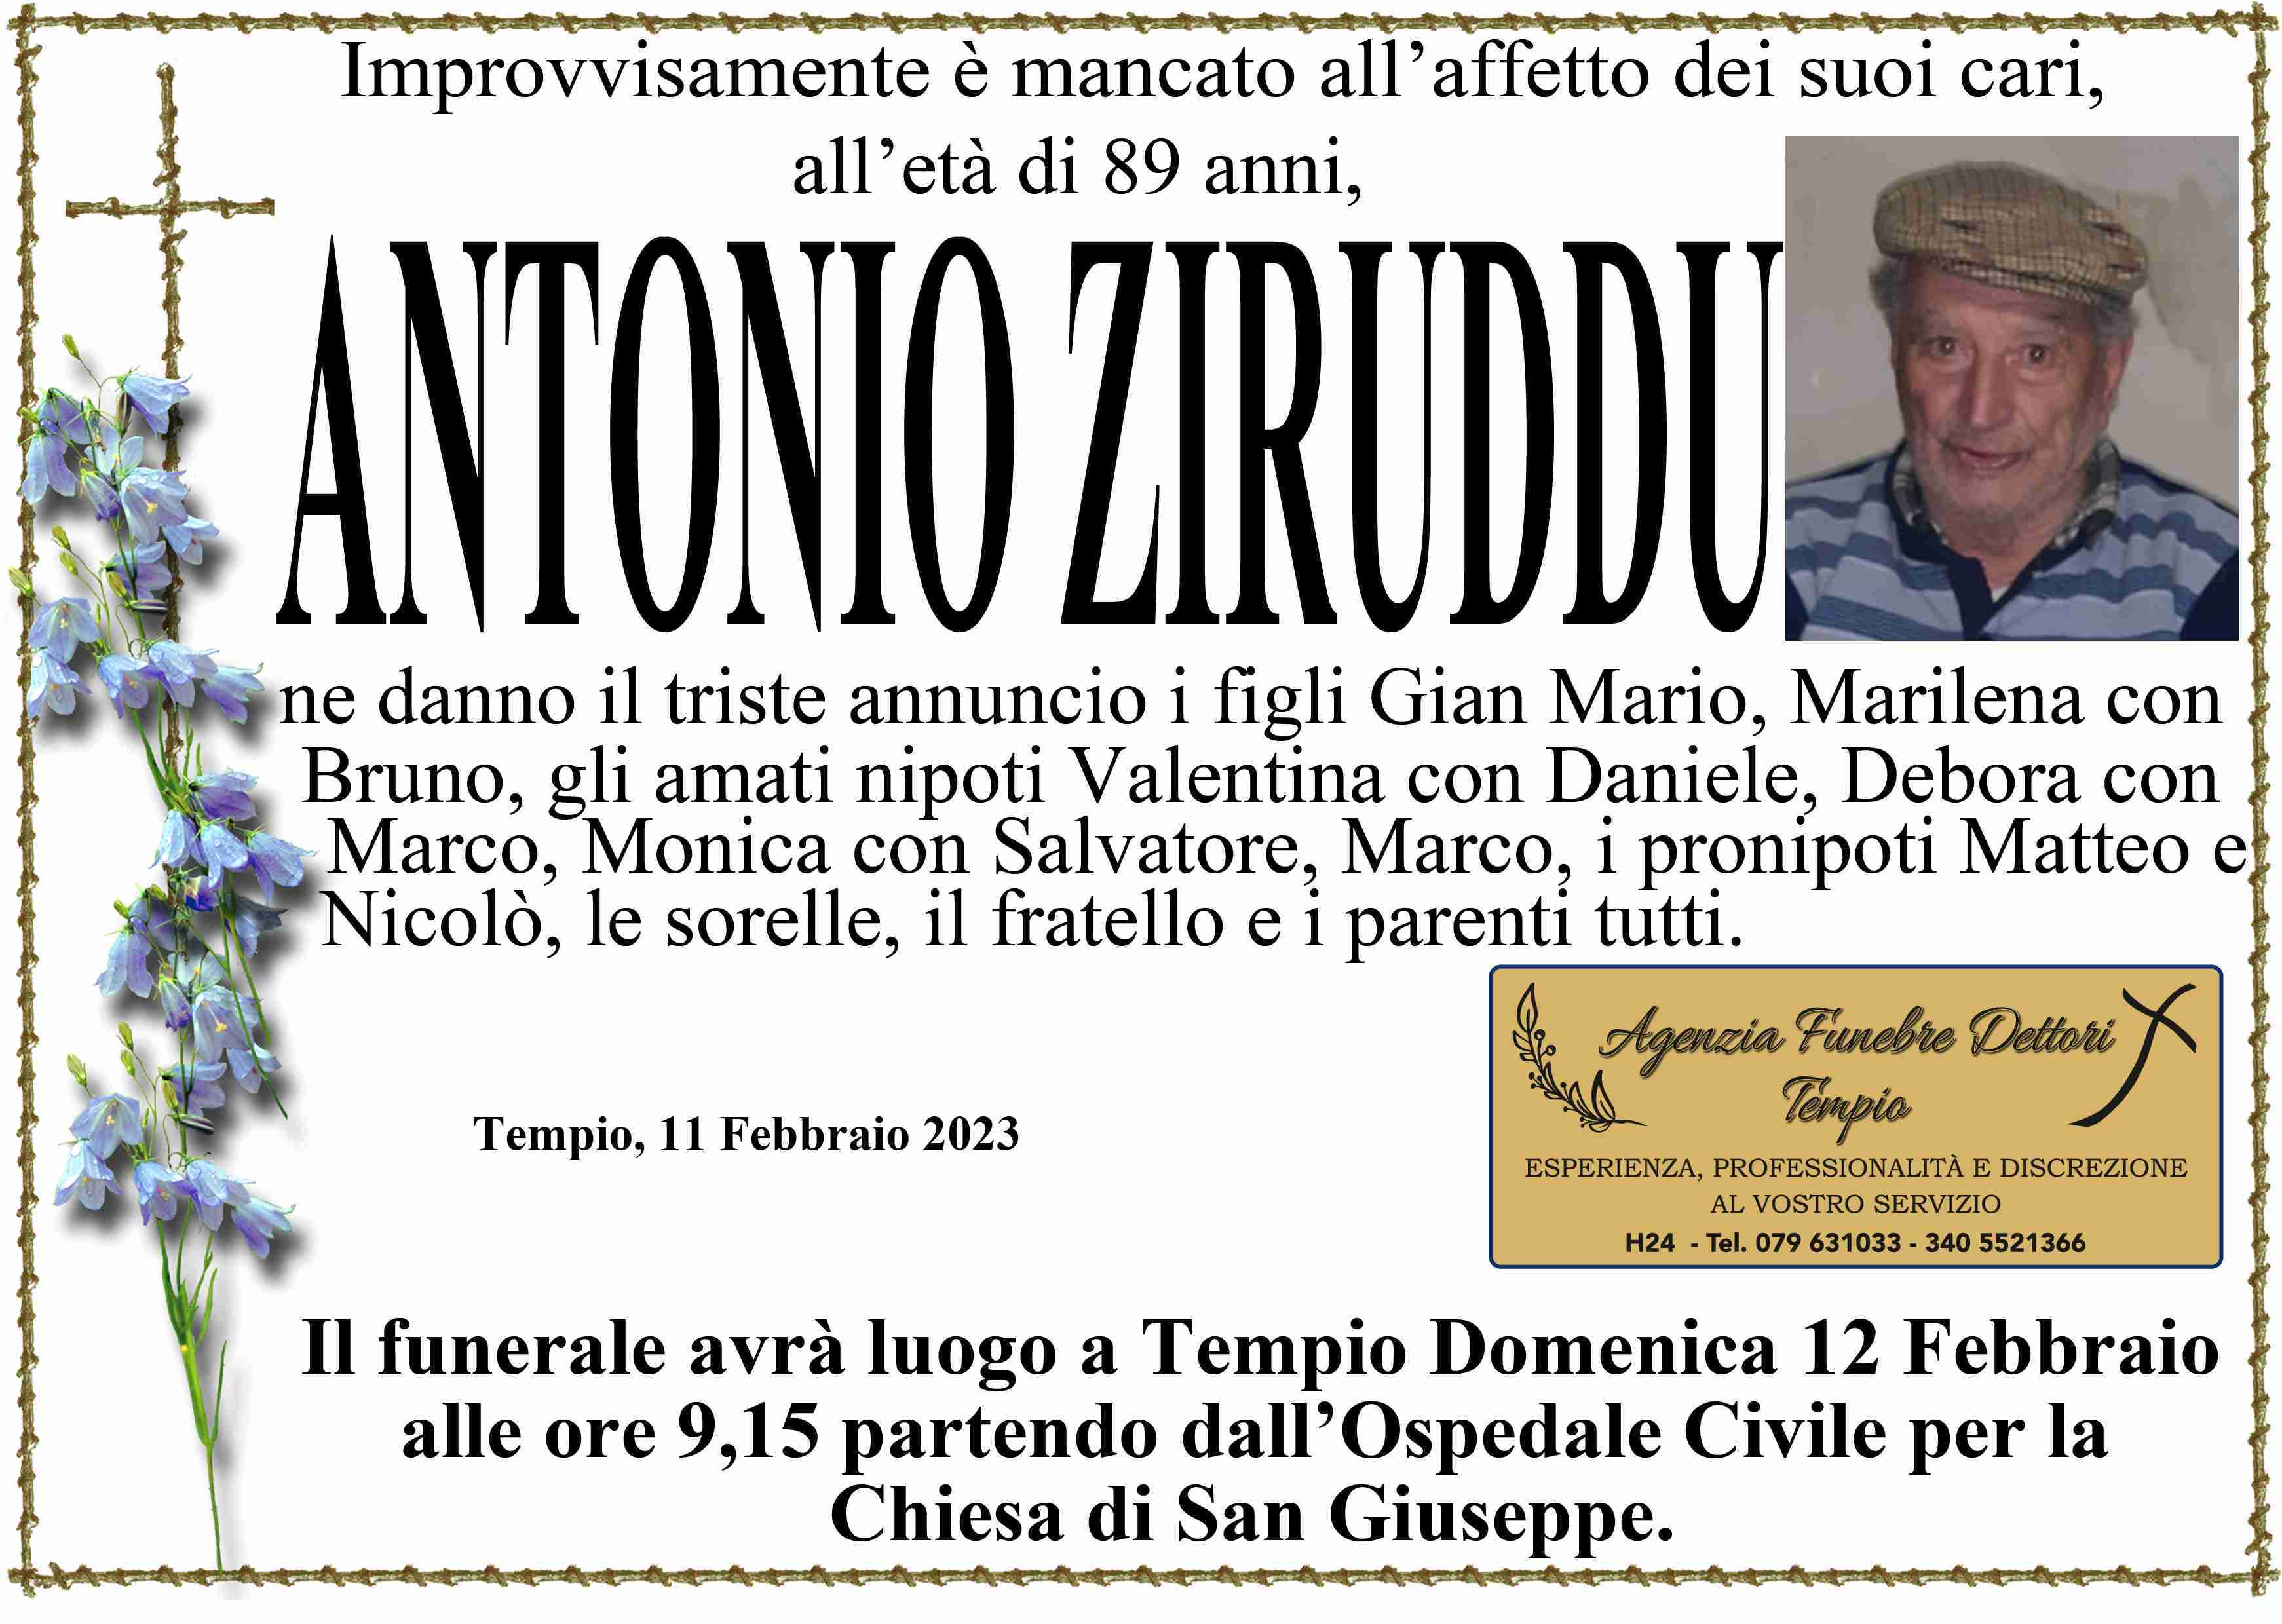 Antonio Ziruddu